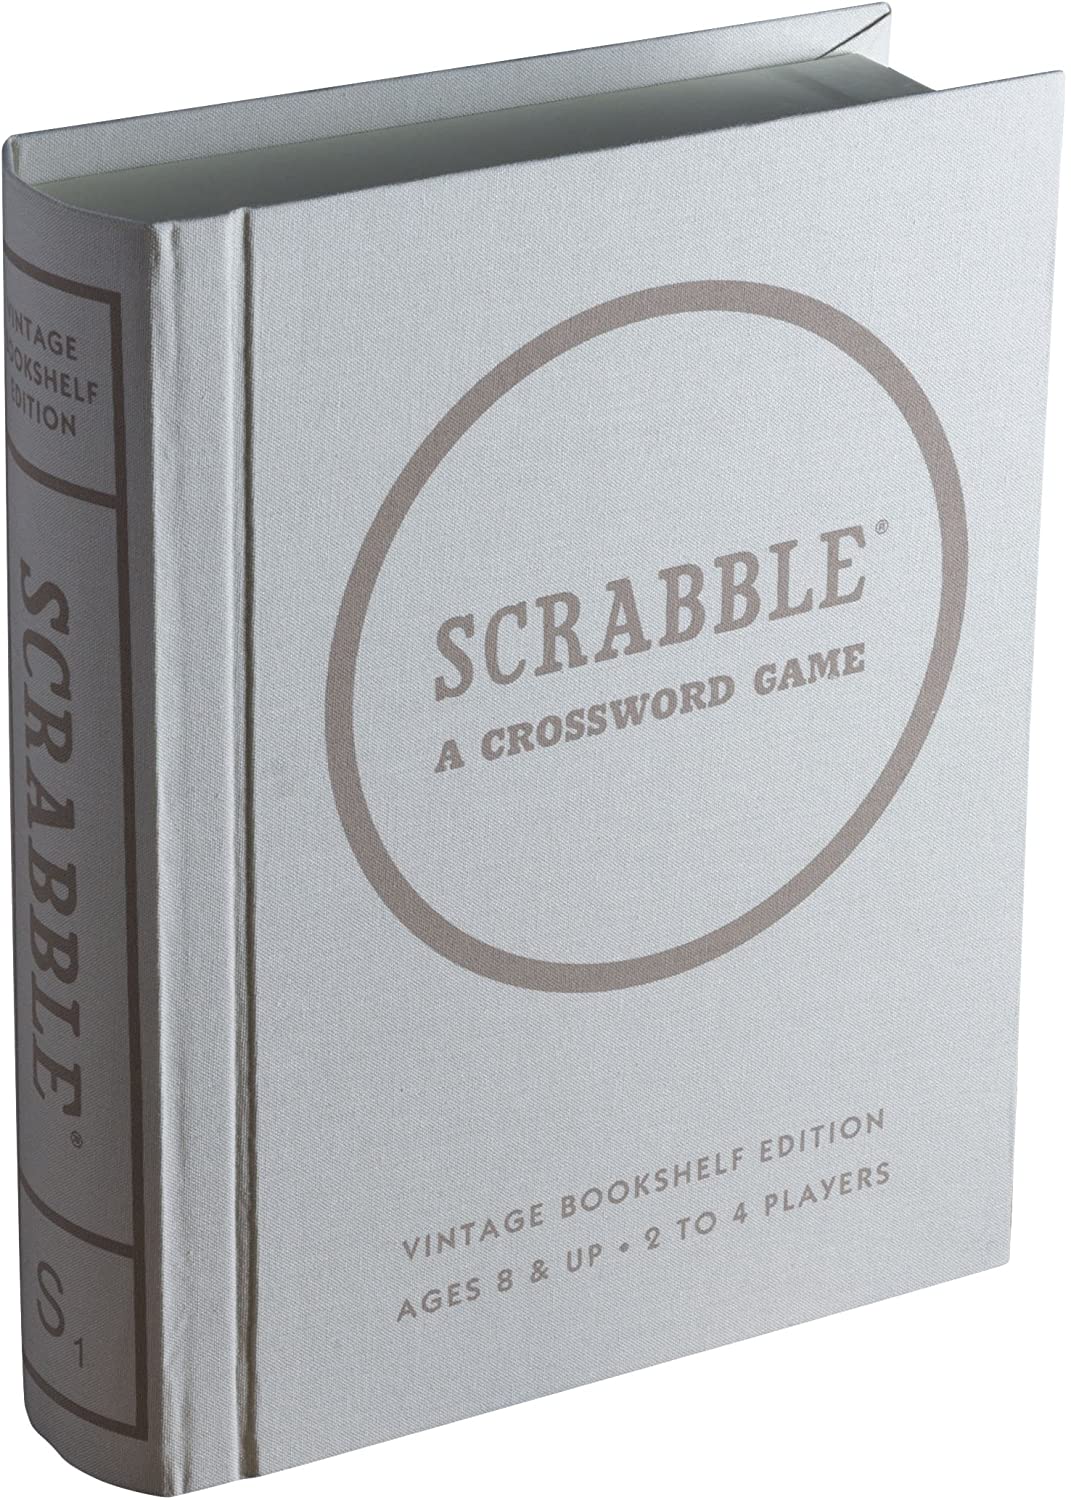 Scrabble Vintage Bookshelf Edition